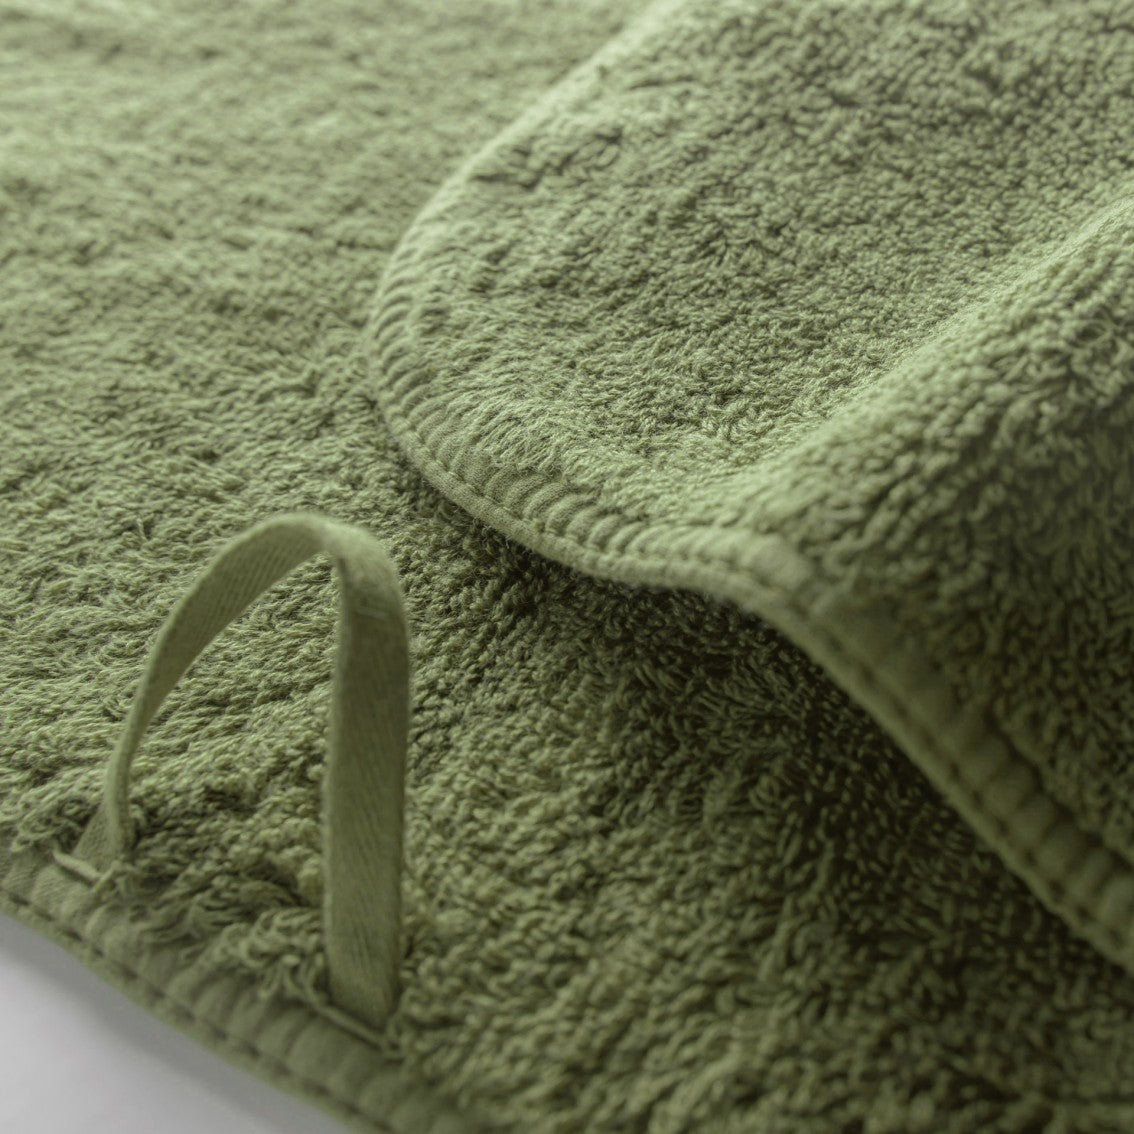 Graccioza Long Double Loop Luxury Bath Towels (Sea Mist)